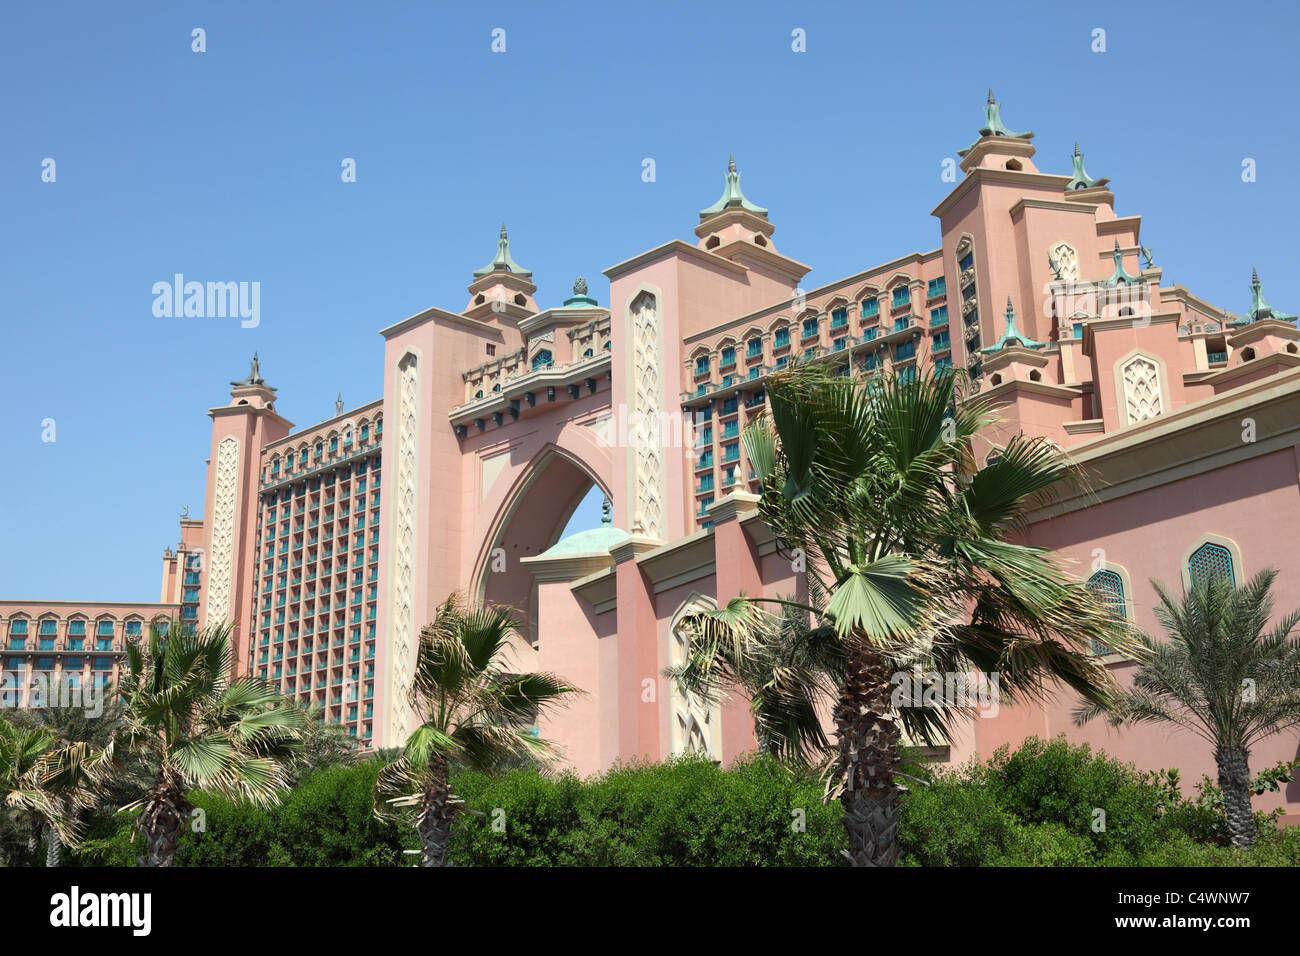 Atlantis, The Palm resort hotel in Dubai, United Arab Emirates Stock Photo